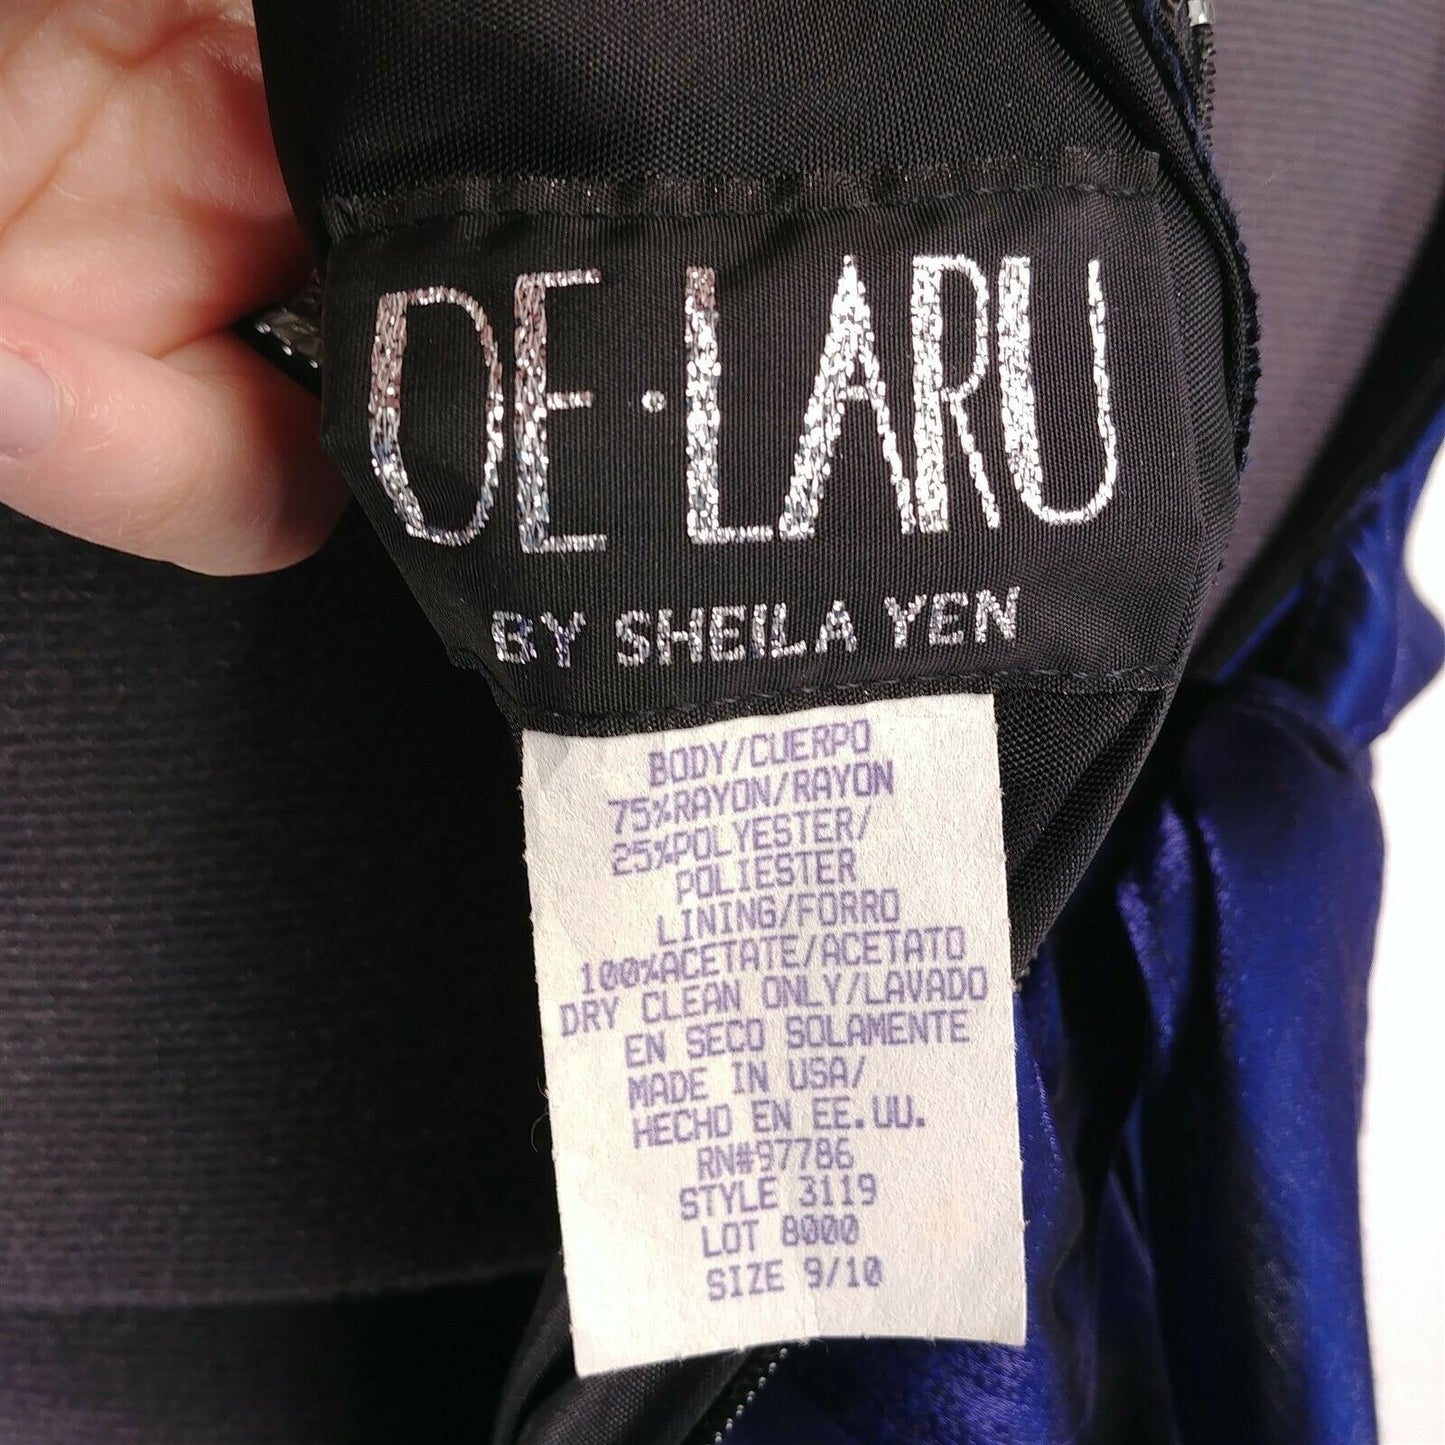 De Laru by Sheila Yen Blue Full Length Formal Evening Gown Juniors Size 9